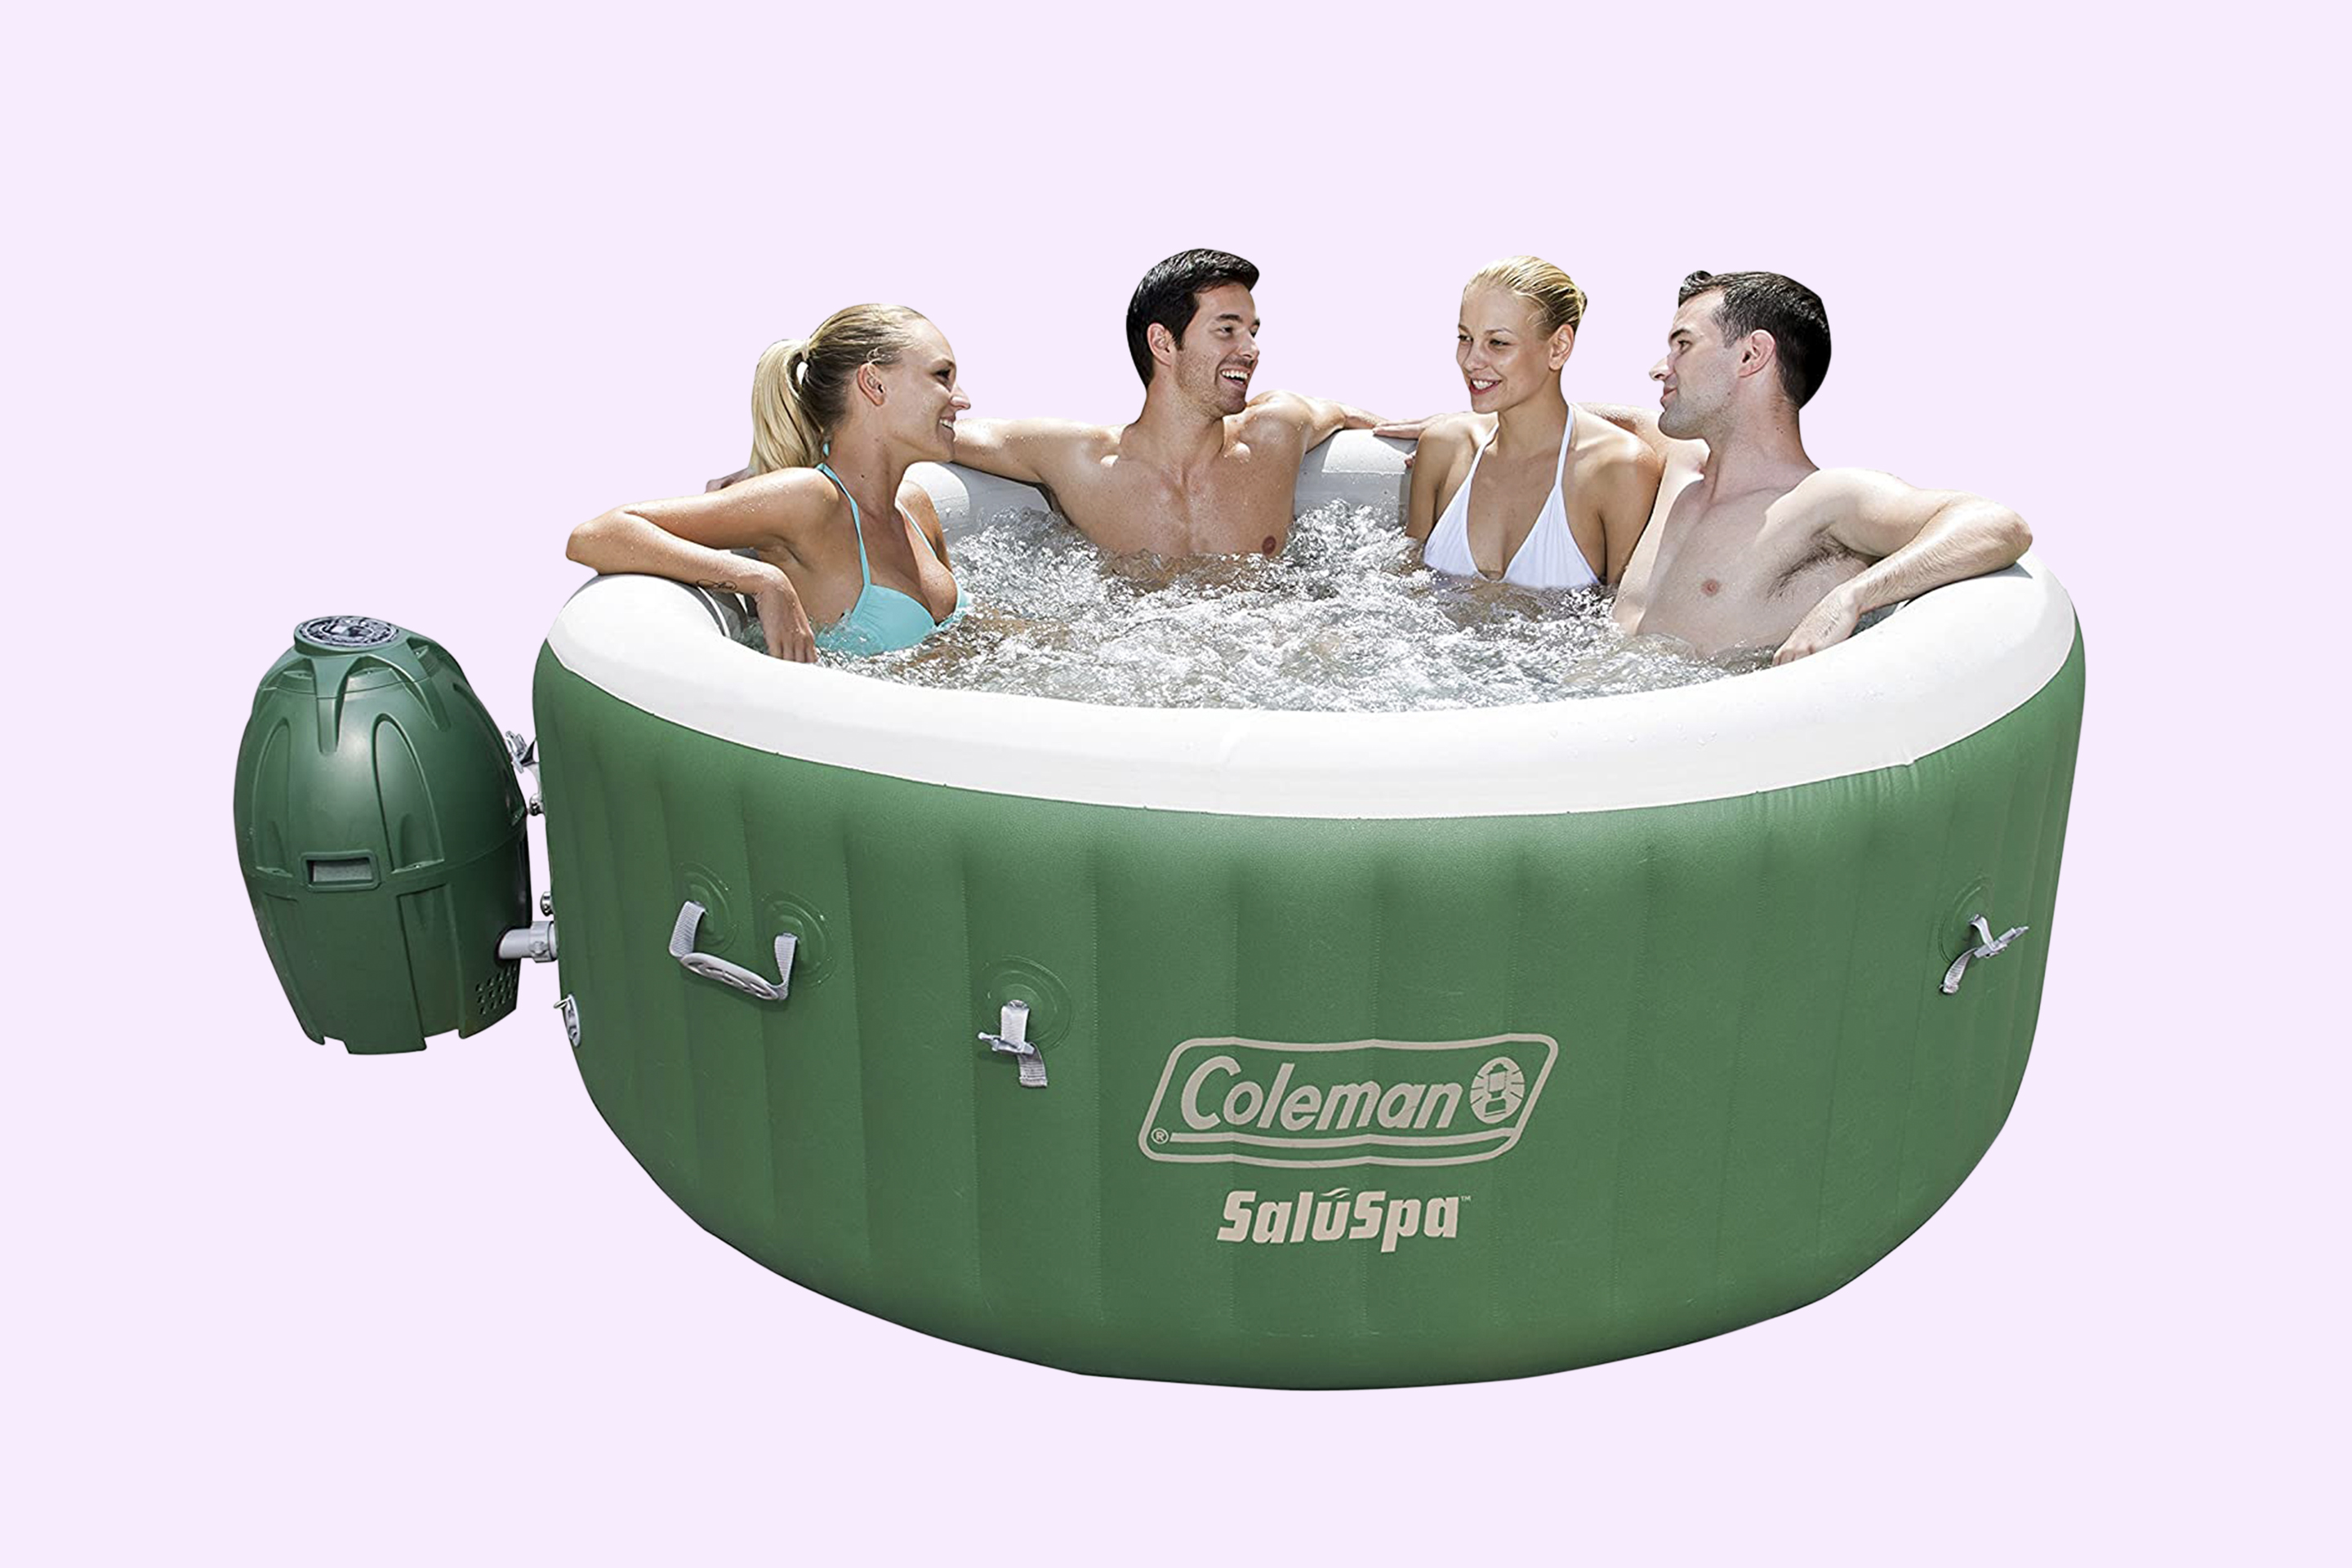 Coleman SaluSpa Inflatable Hot Tub Spa copy